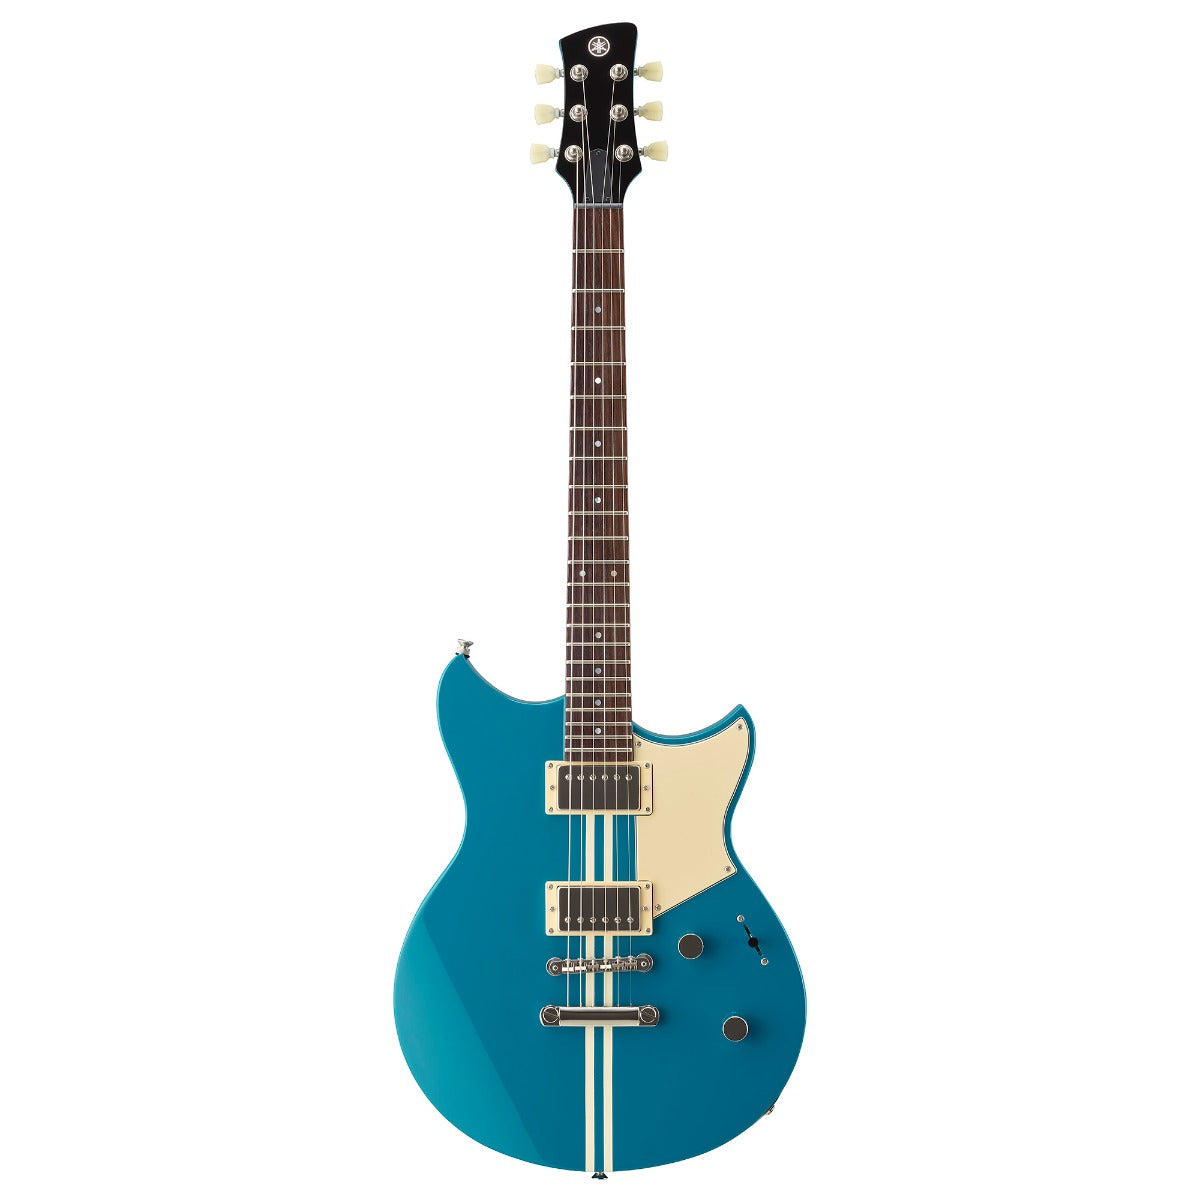 Yamaha RSE20 Revstar Element Electric Guitar - Swift Blue, View 3